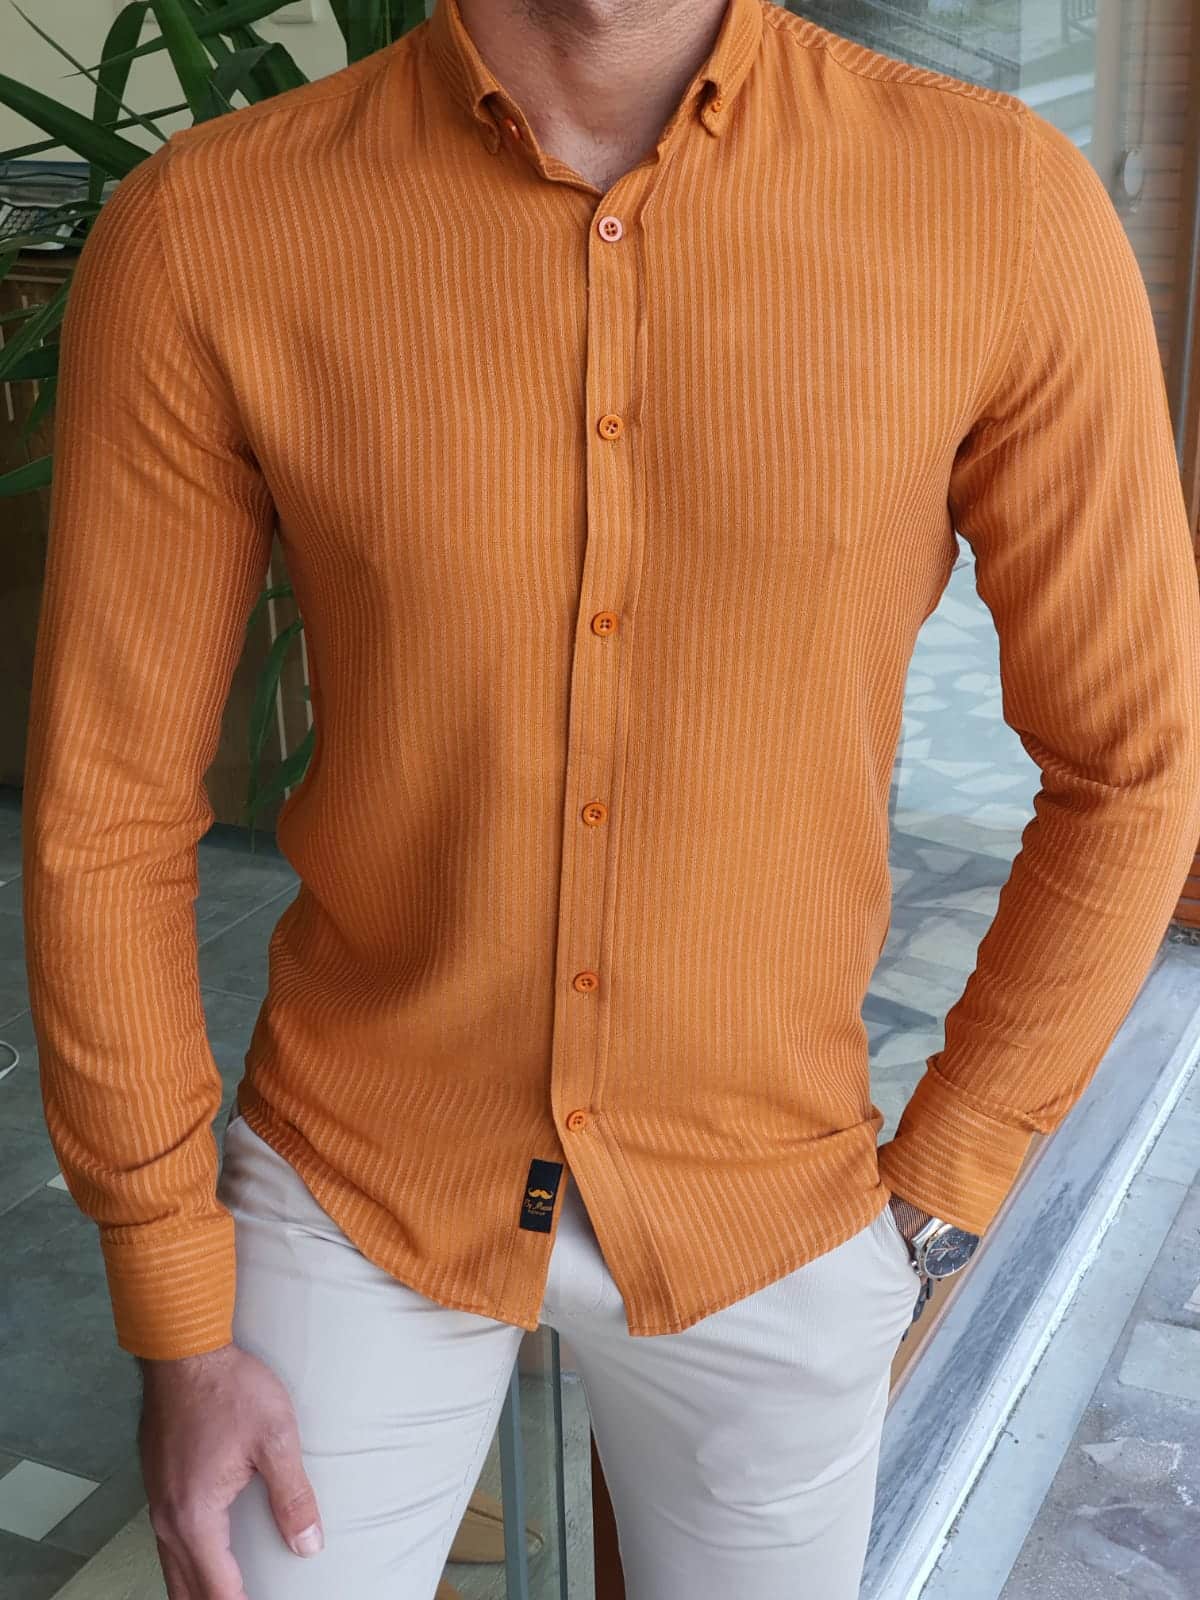 Striped Cotton Shirt